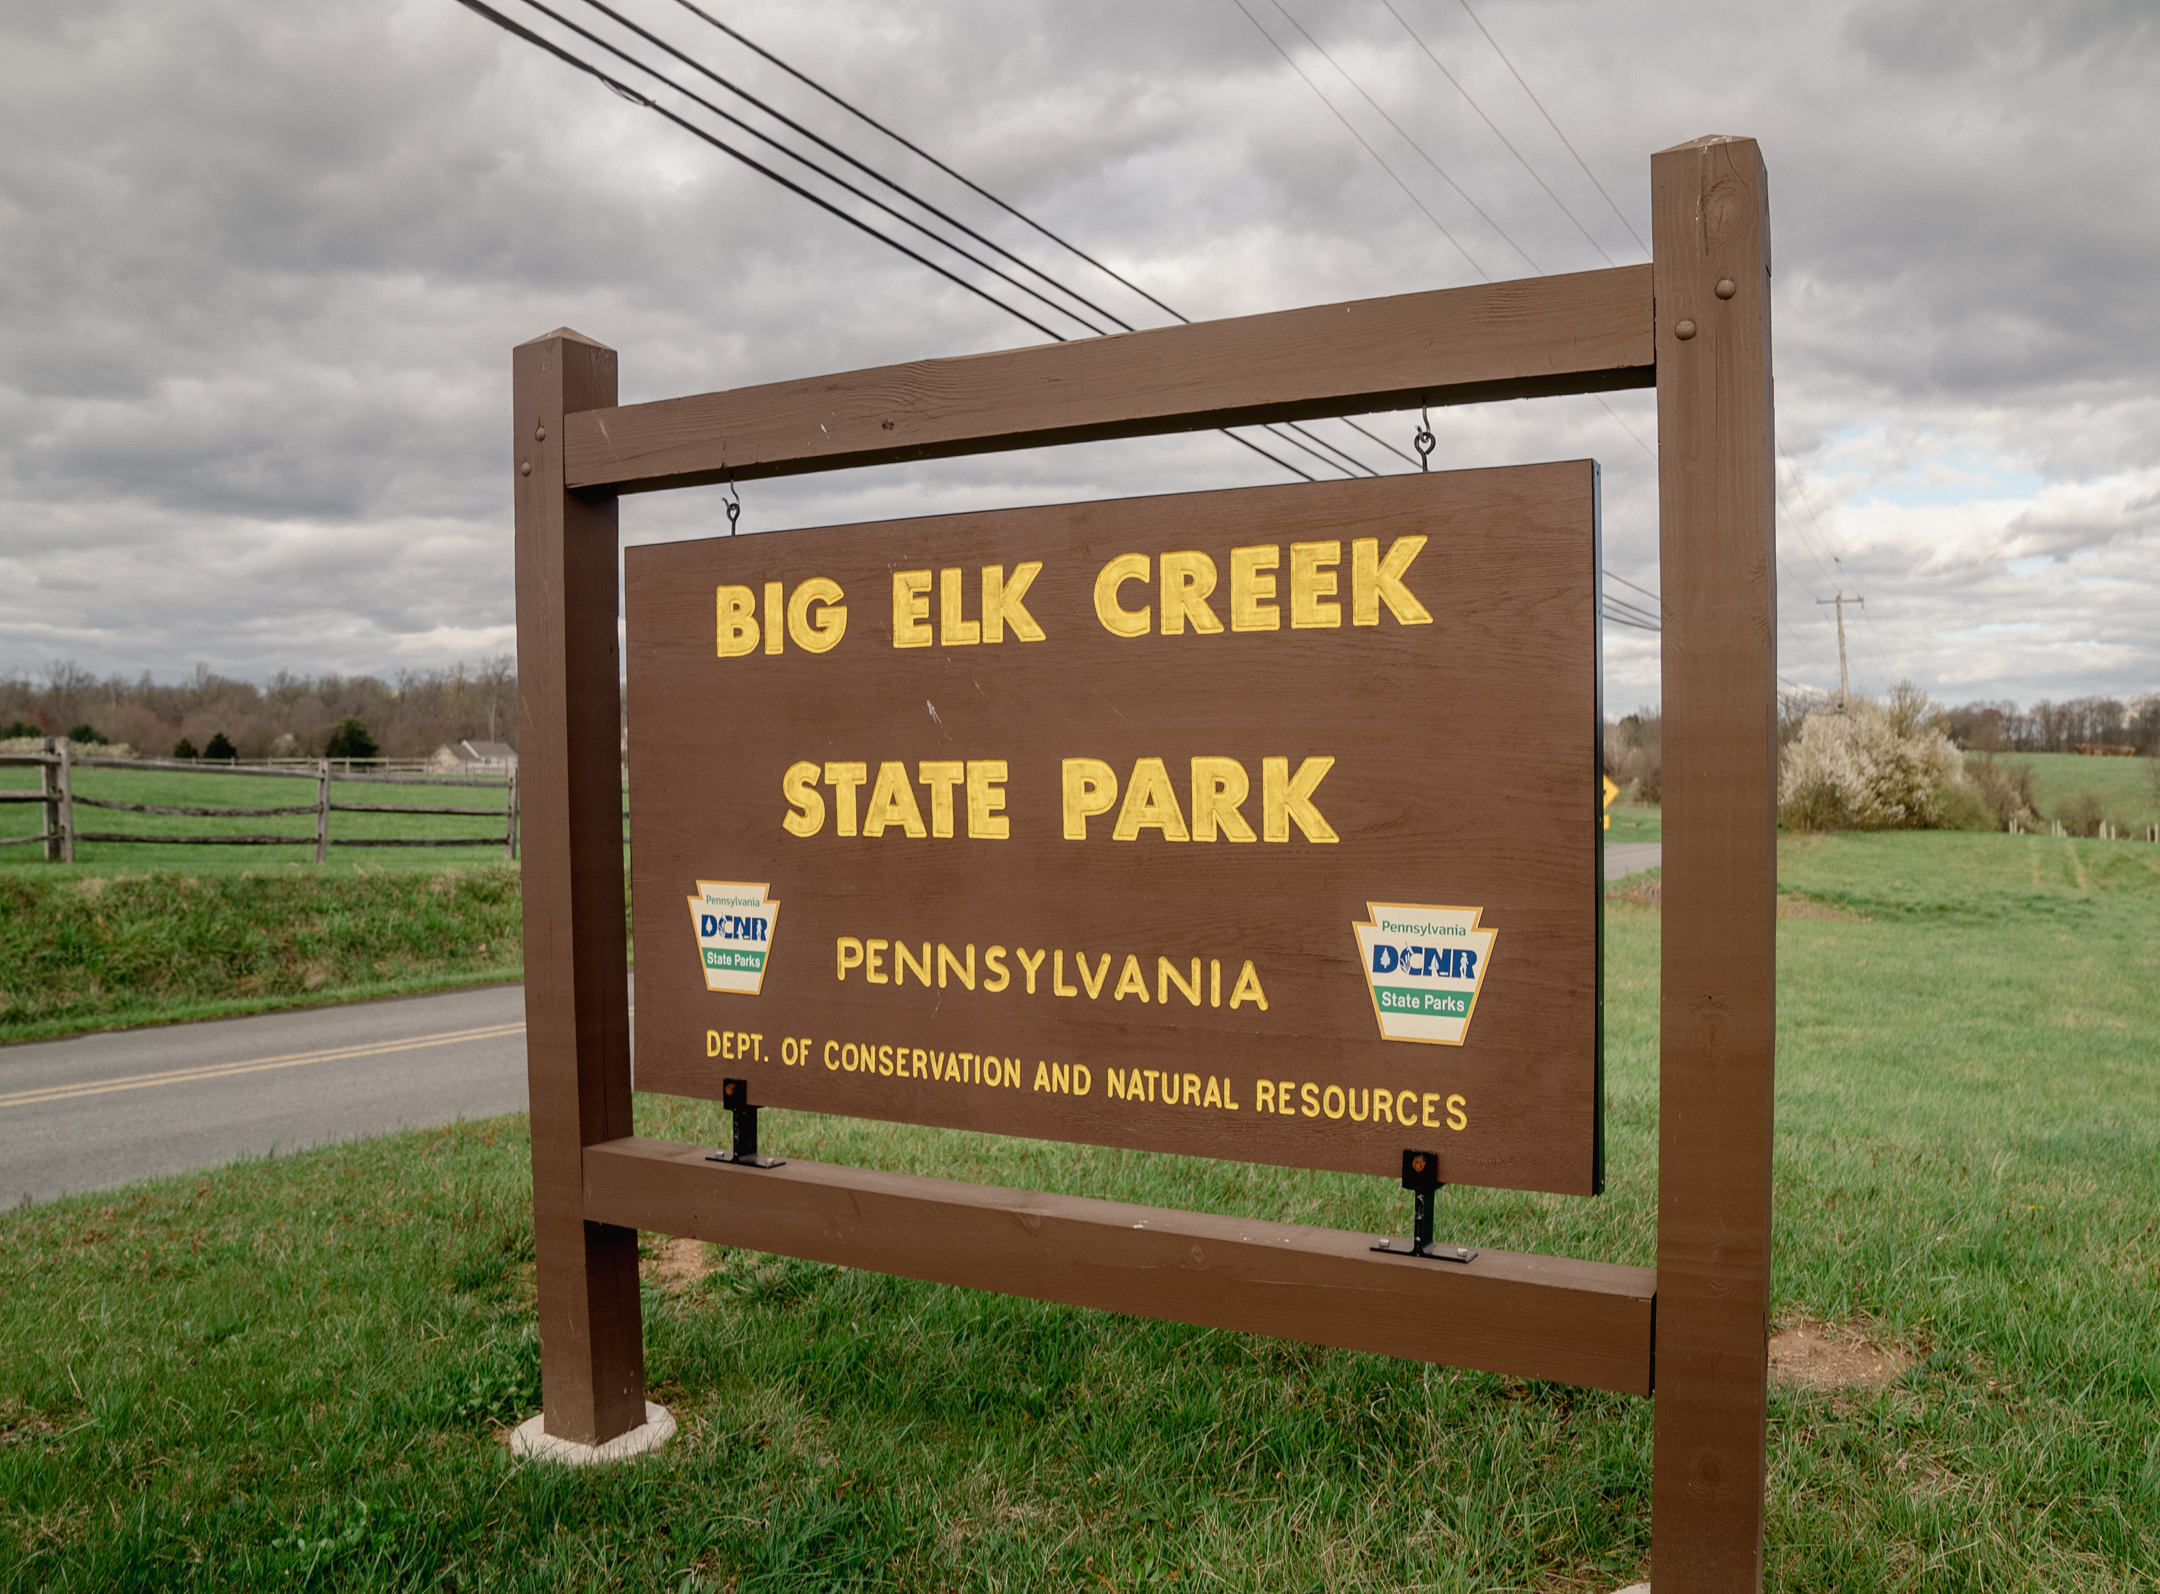 Big Elk Creek State Park, Pennsylvania, Dept. of Conservation and Natural Resources